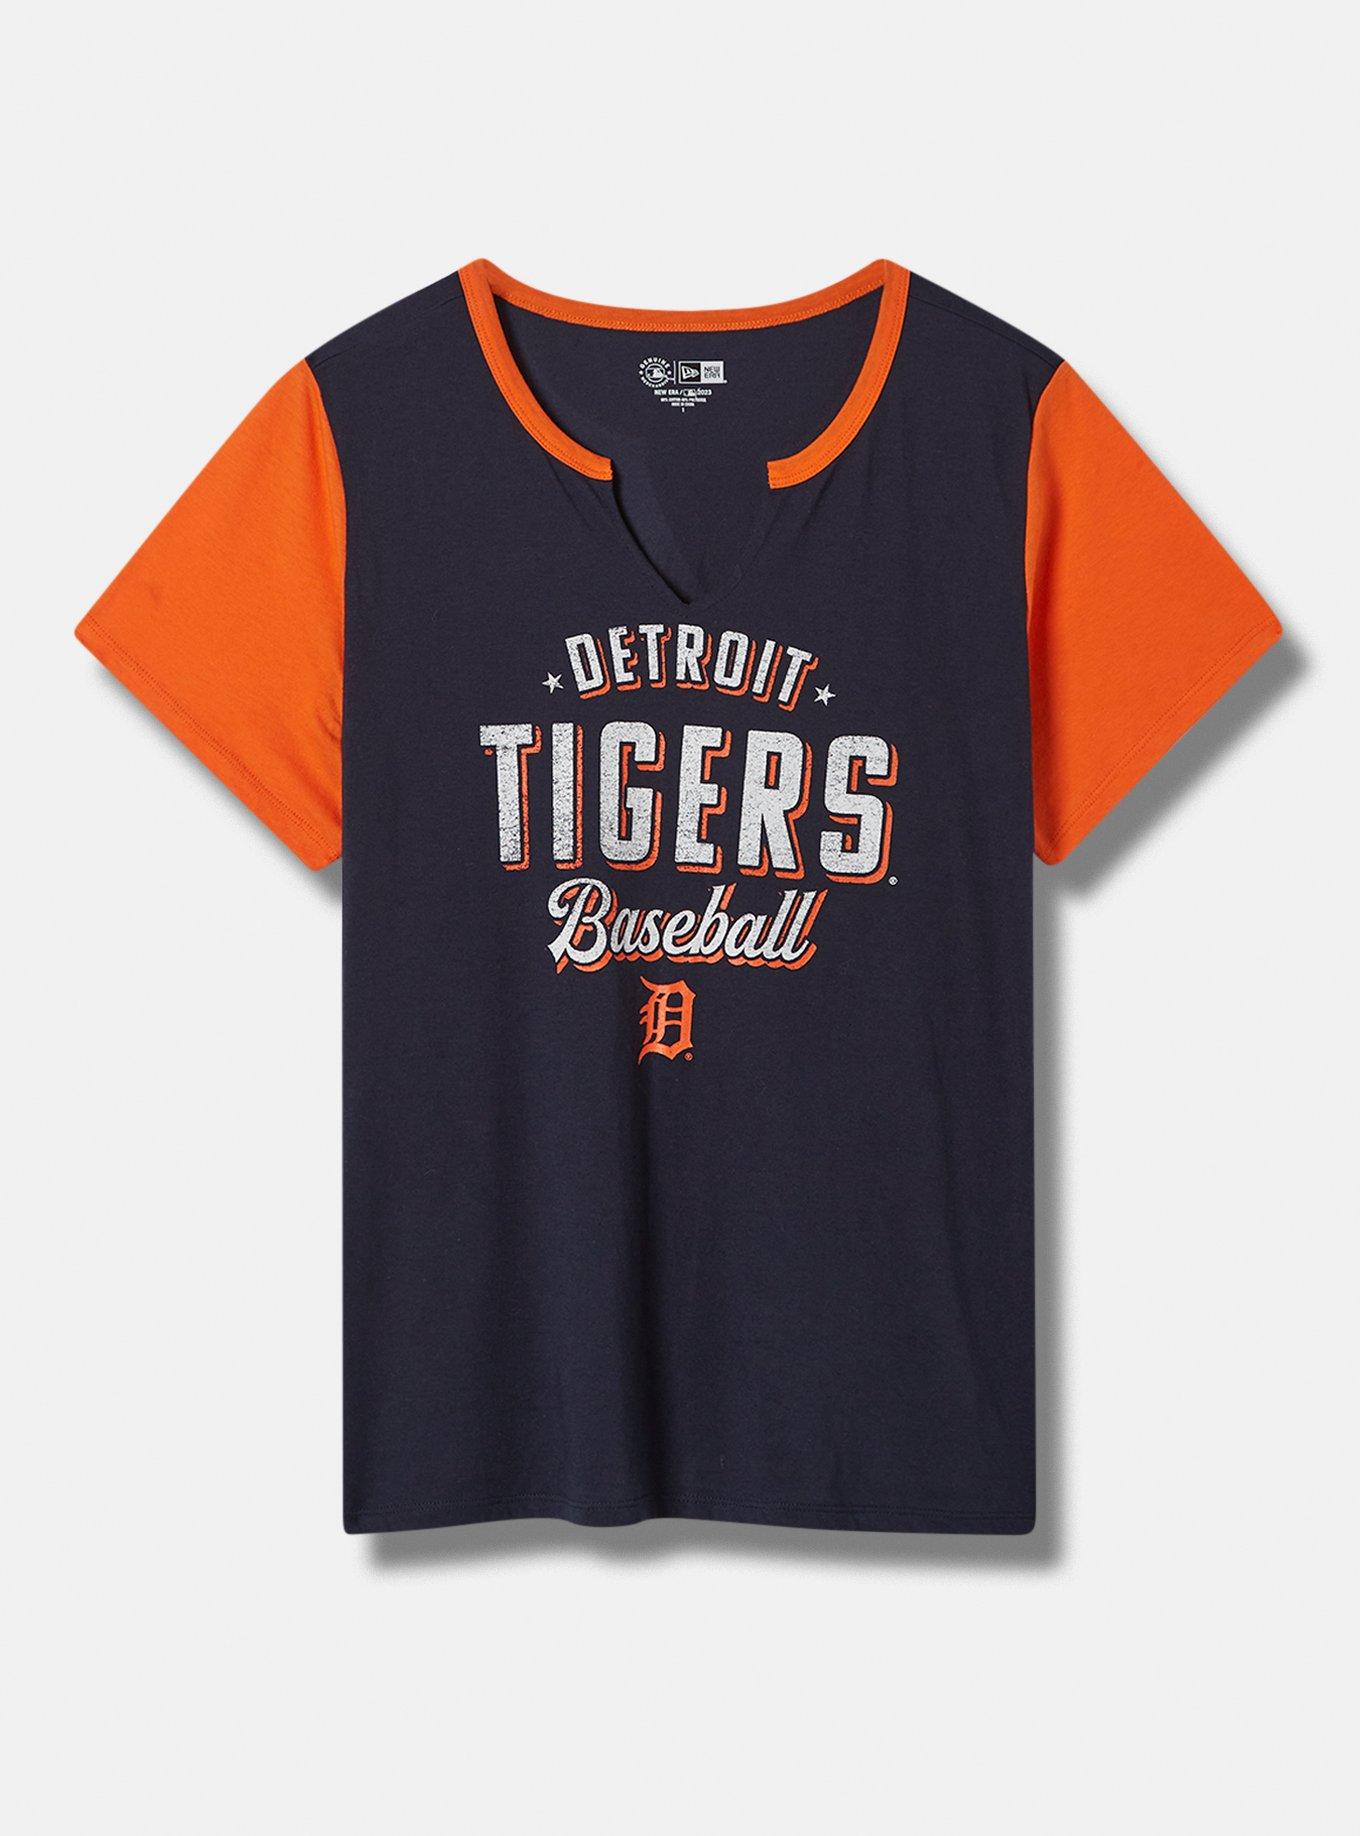 Detroit Tigers Baseball Jersey Mens MLB Button-Front Shirt L Large Black  Orange